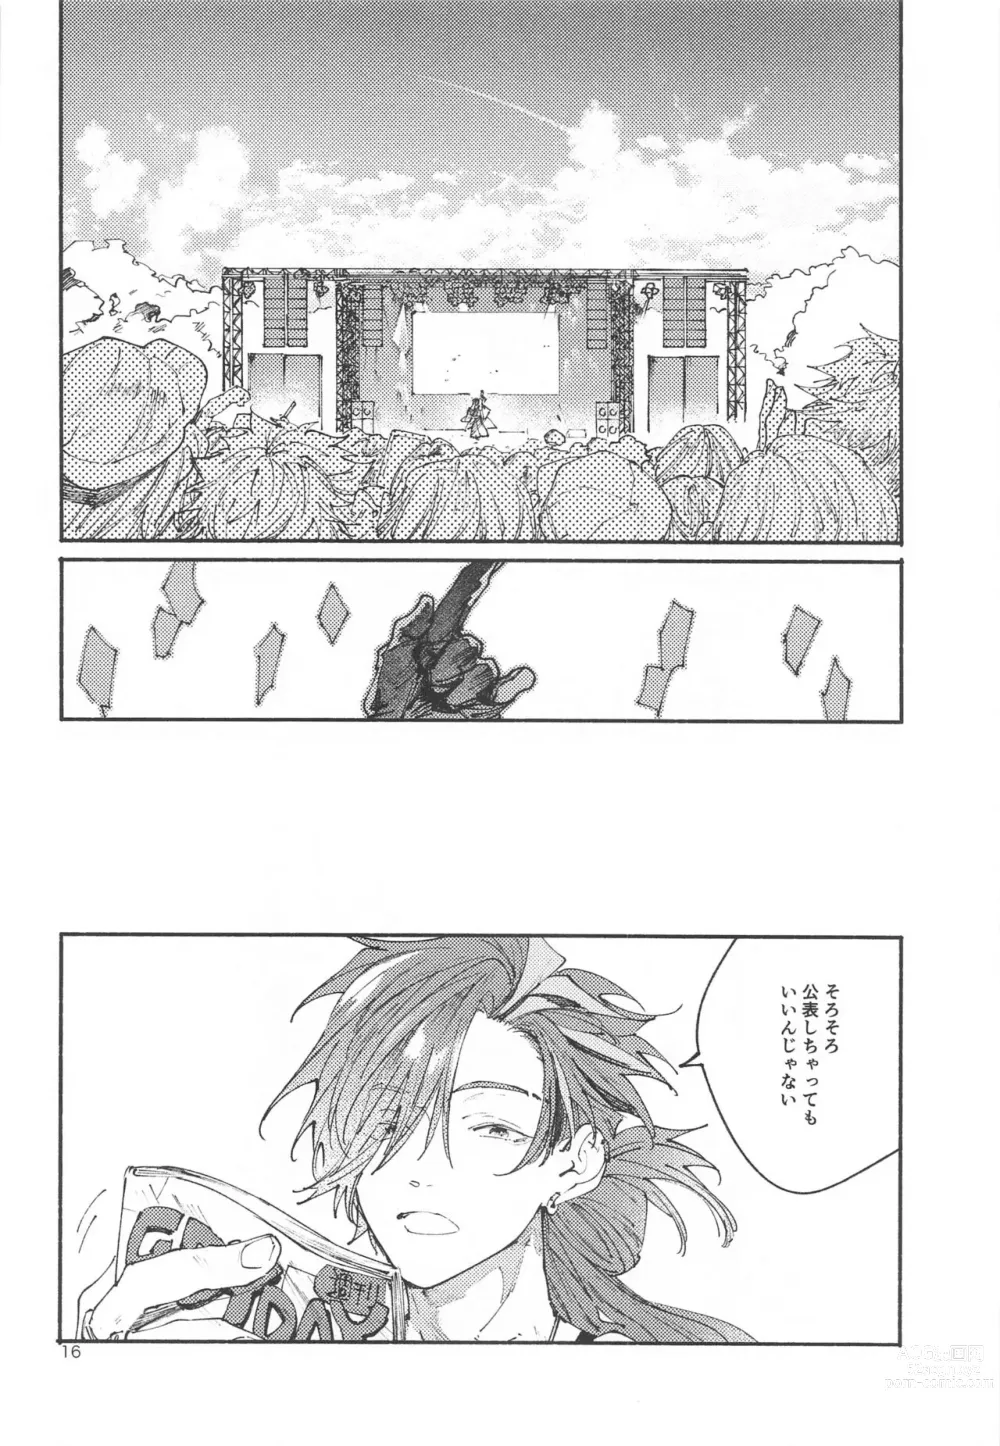 Page 15 of doujinshi Idol-san wa Koi o  Shitteru  - princess knows himself.